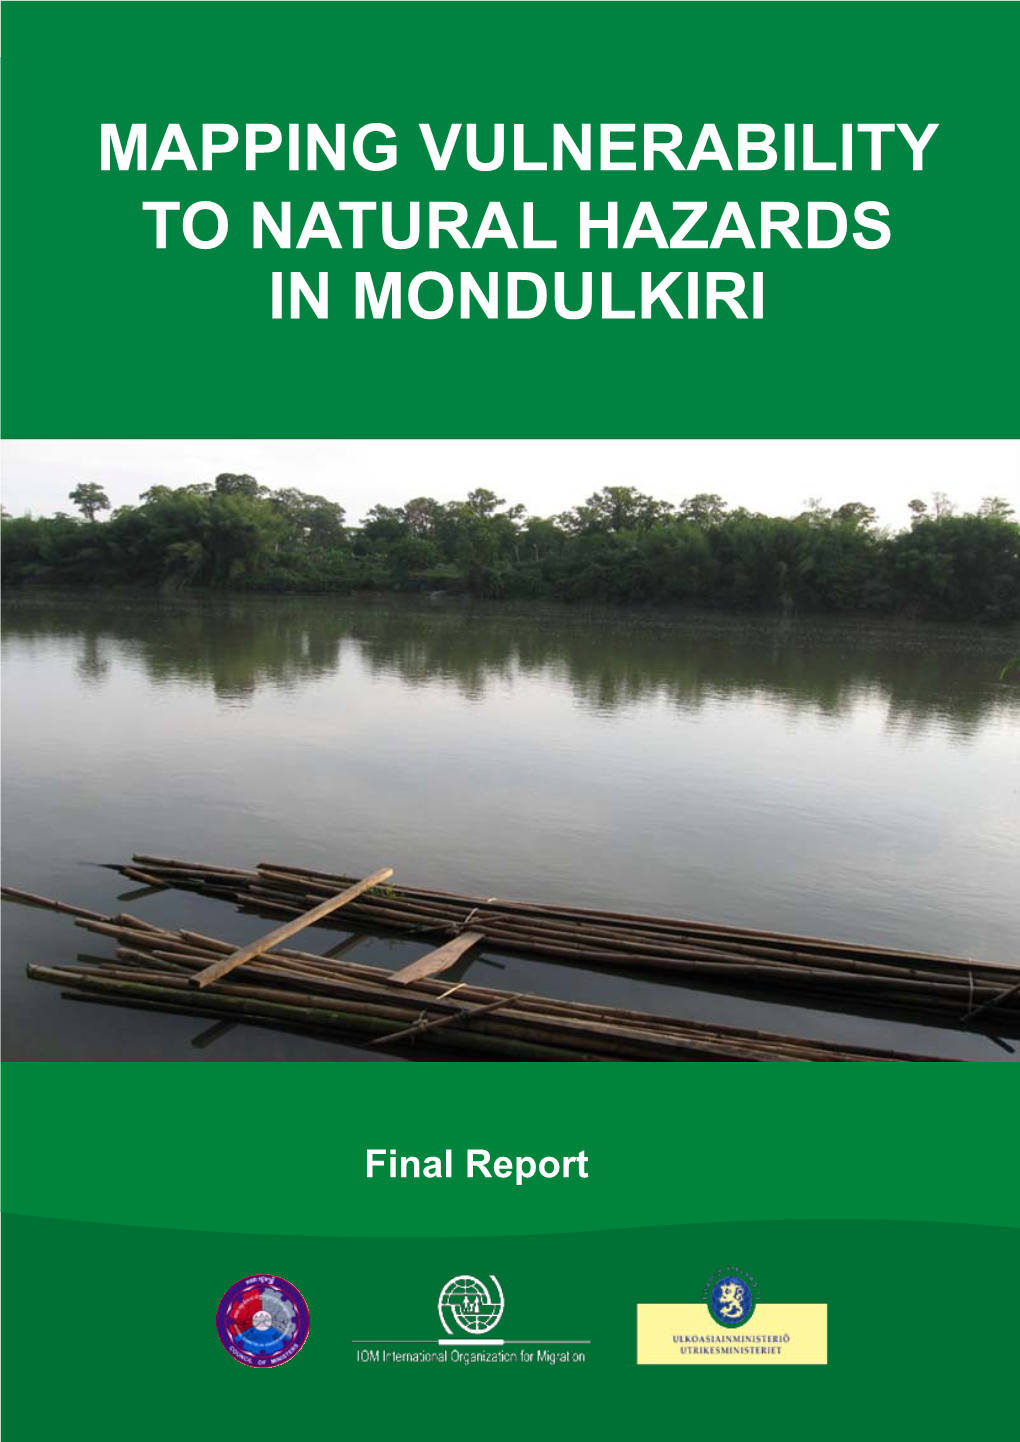 Final Report: Mapping Vulnerability to Natural Hazards in Mondulkiri